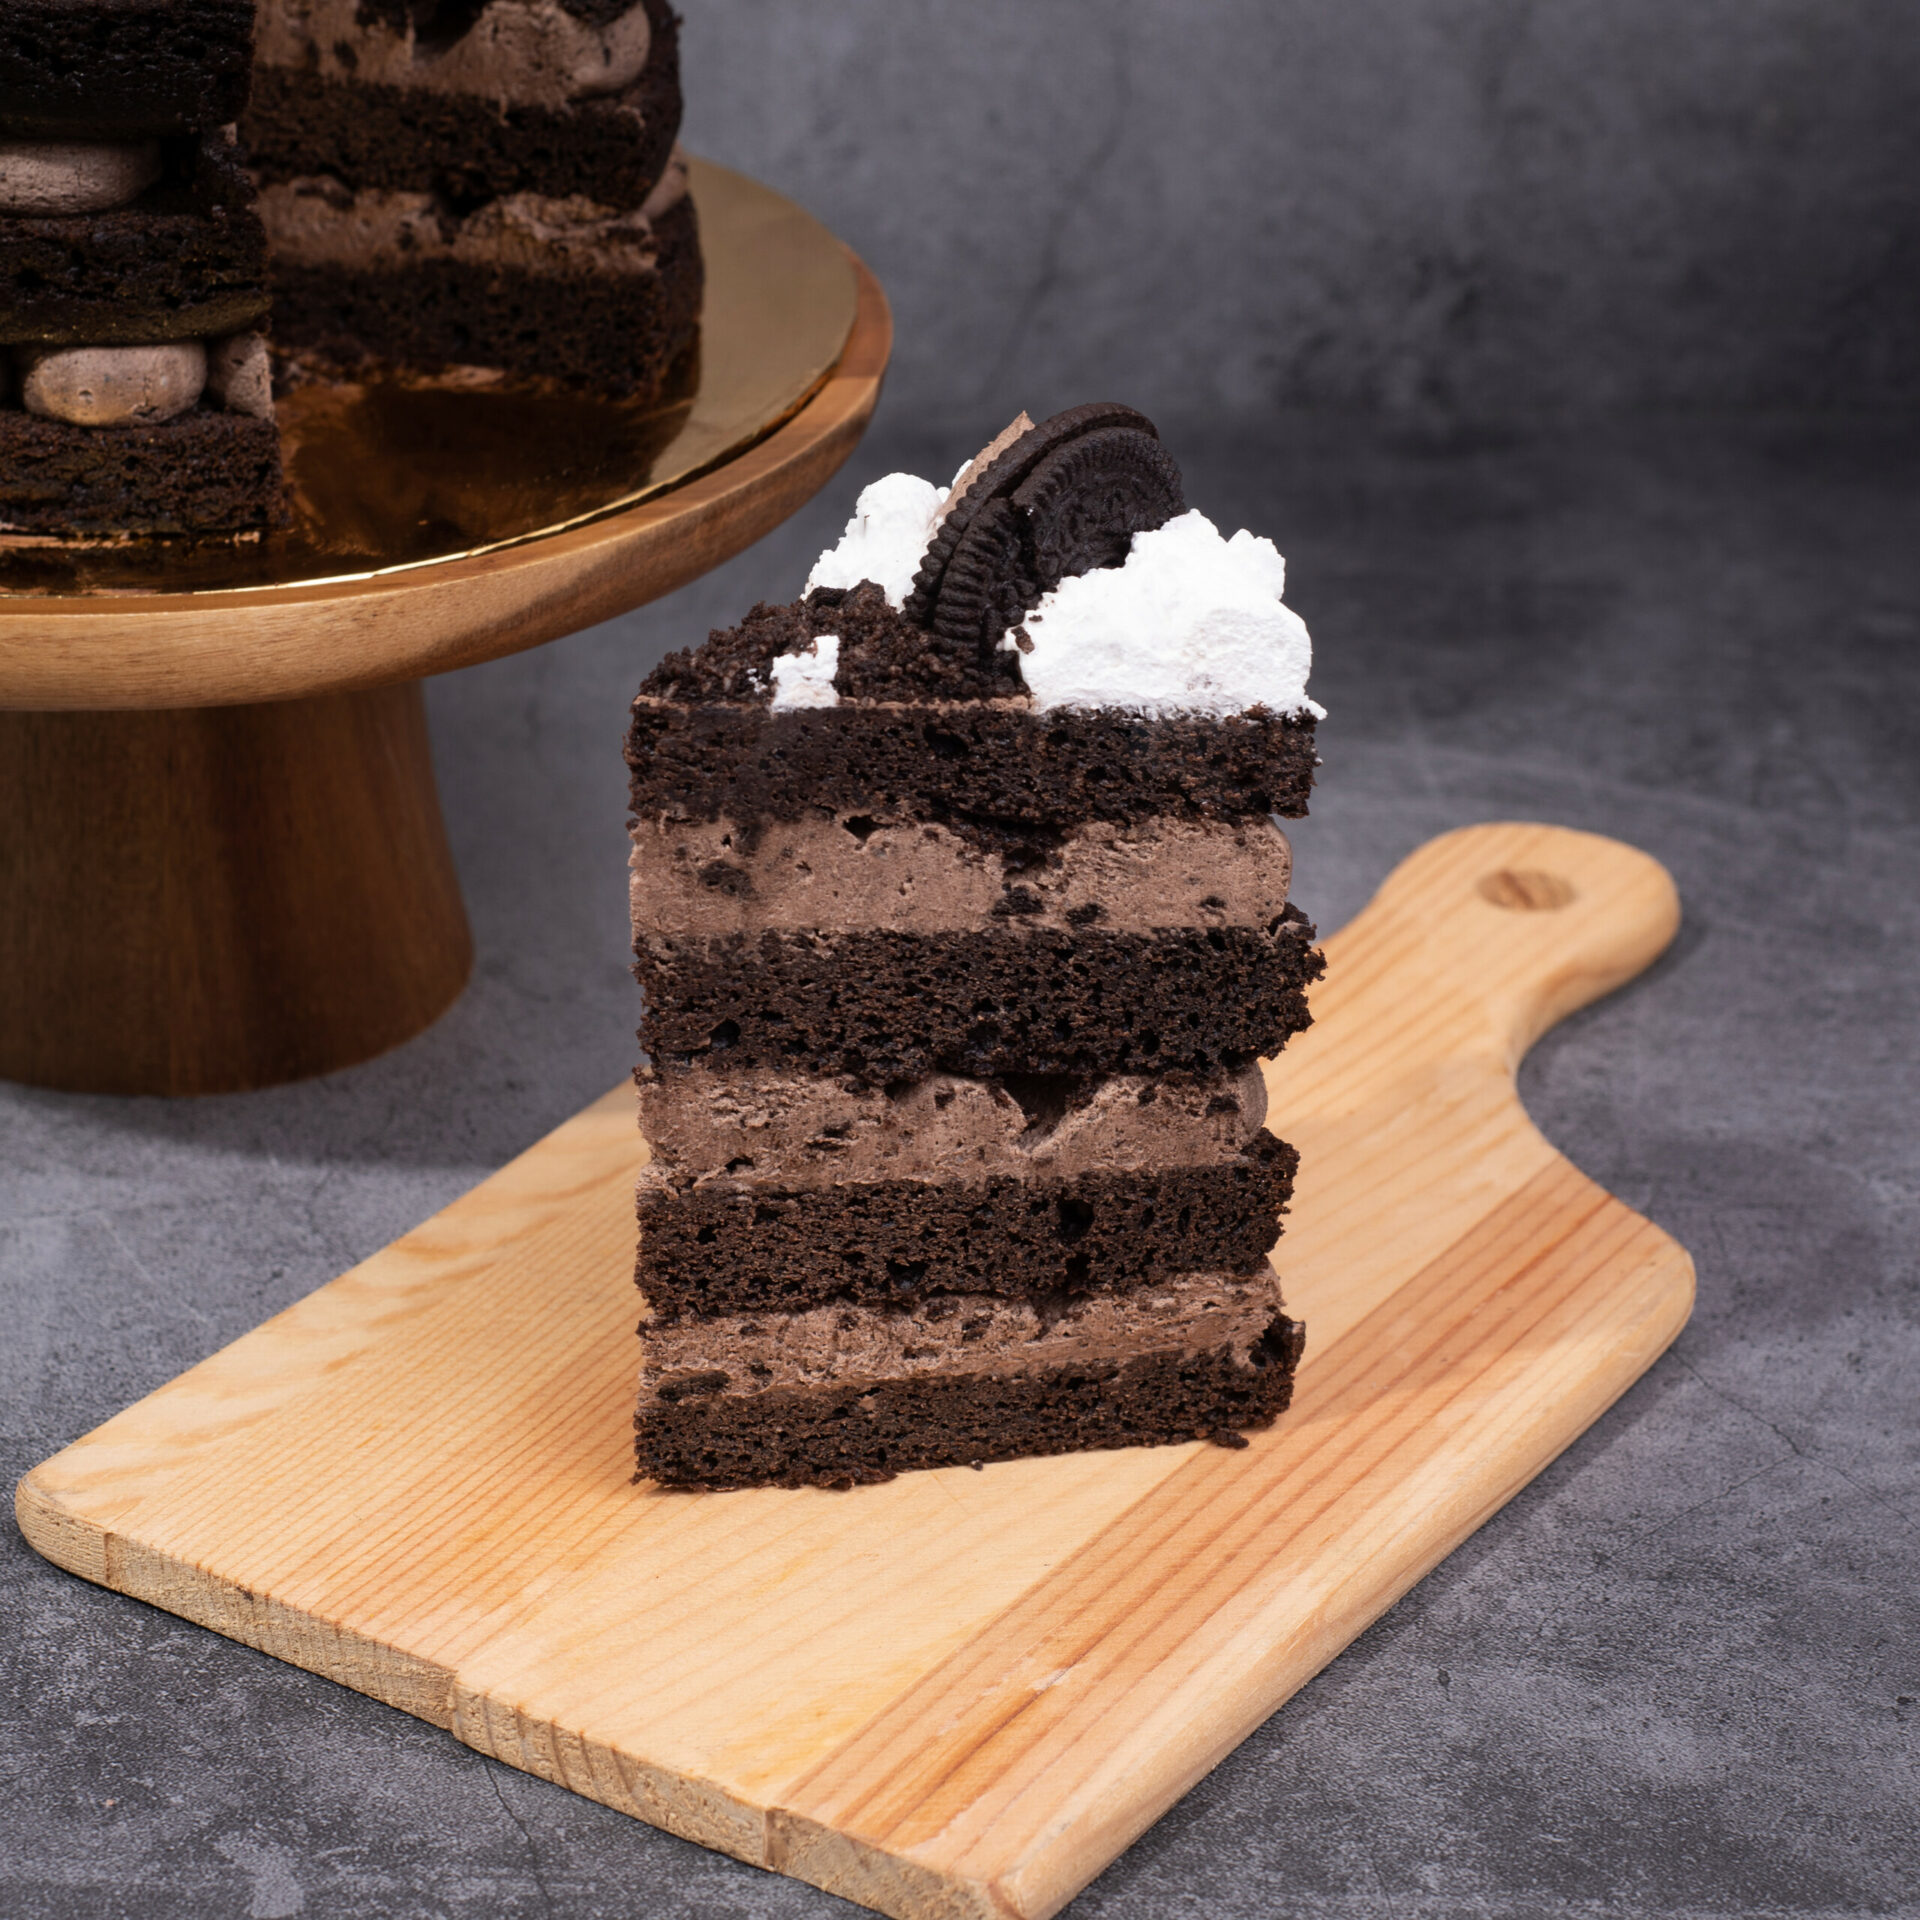 Oreo Chocolate Vegan Naked Cake | Cake Free Delivery KL & PJ